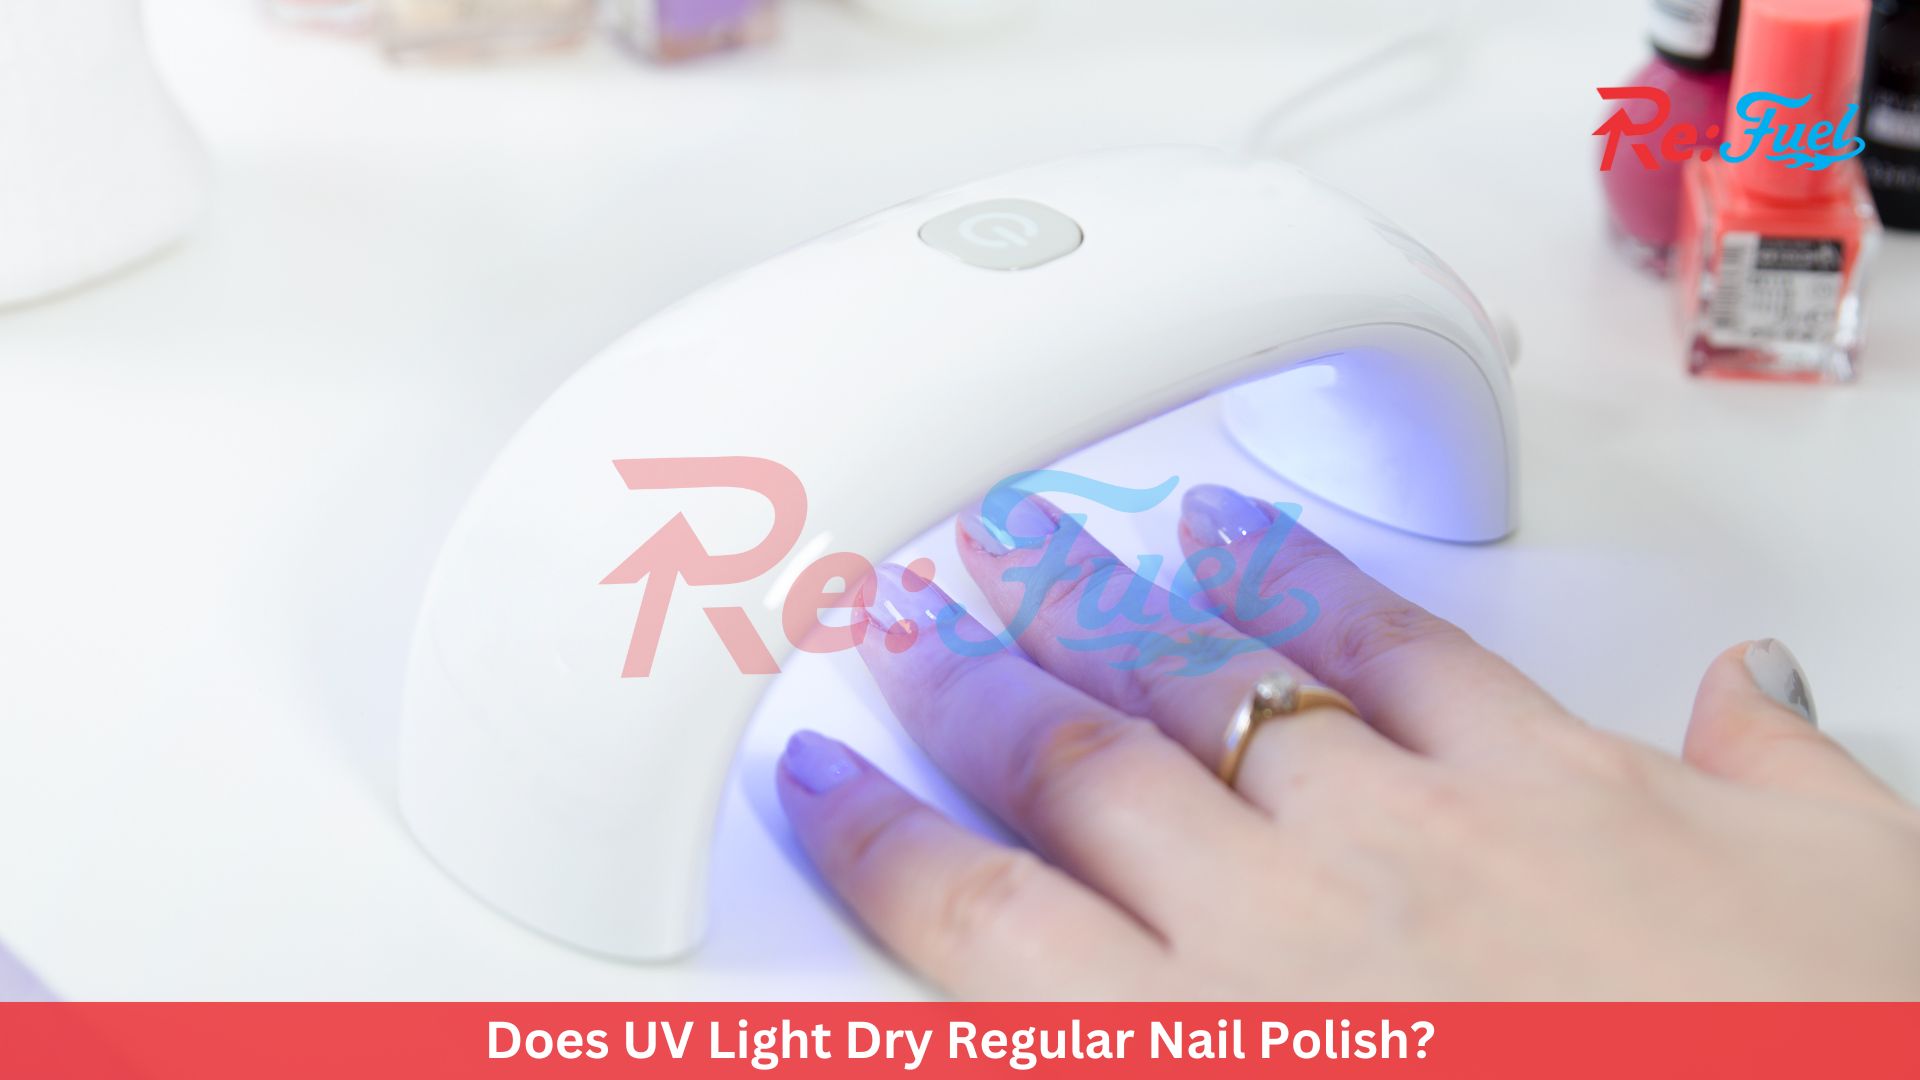 Does UV Light Dry Regular Nail Polish?